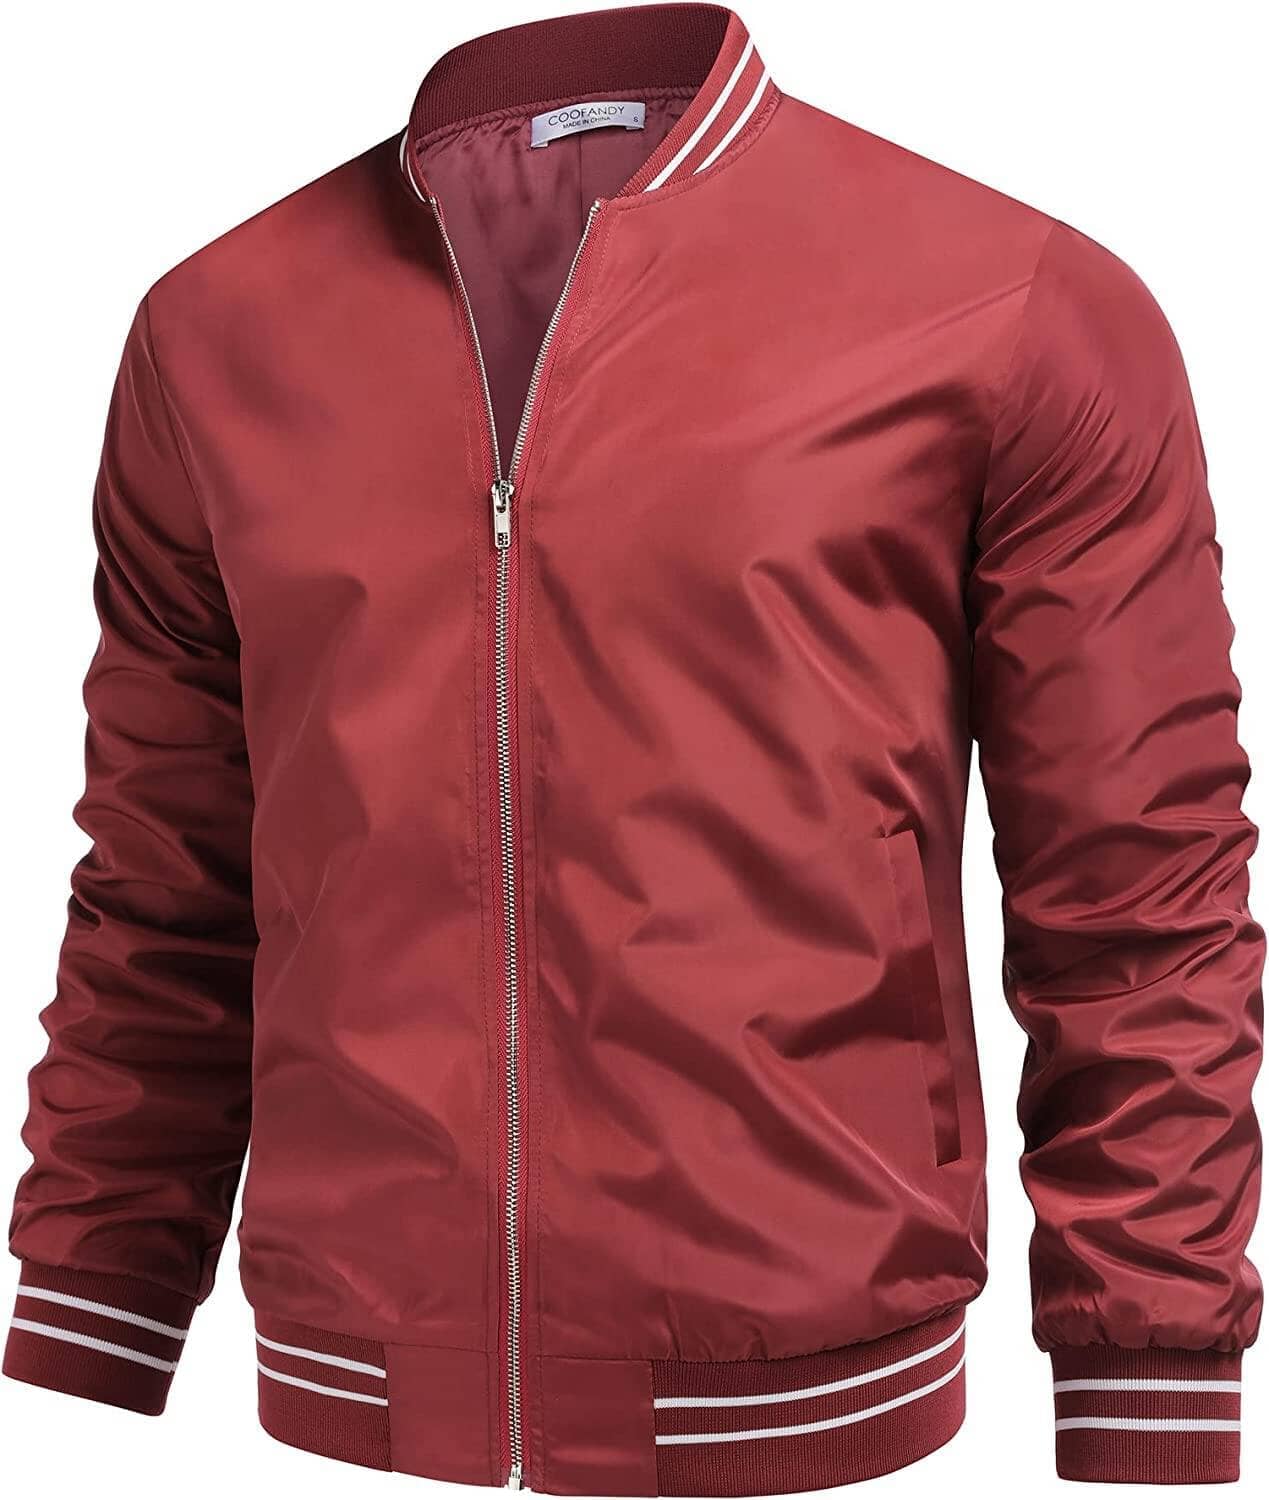 Lightweight Windbreaker Full Zip Jacket (US Only) Jackets COOFANDY Store Wine Red S 